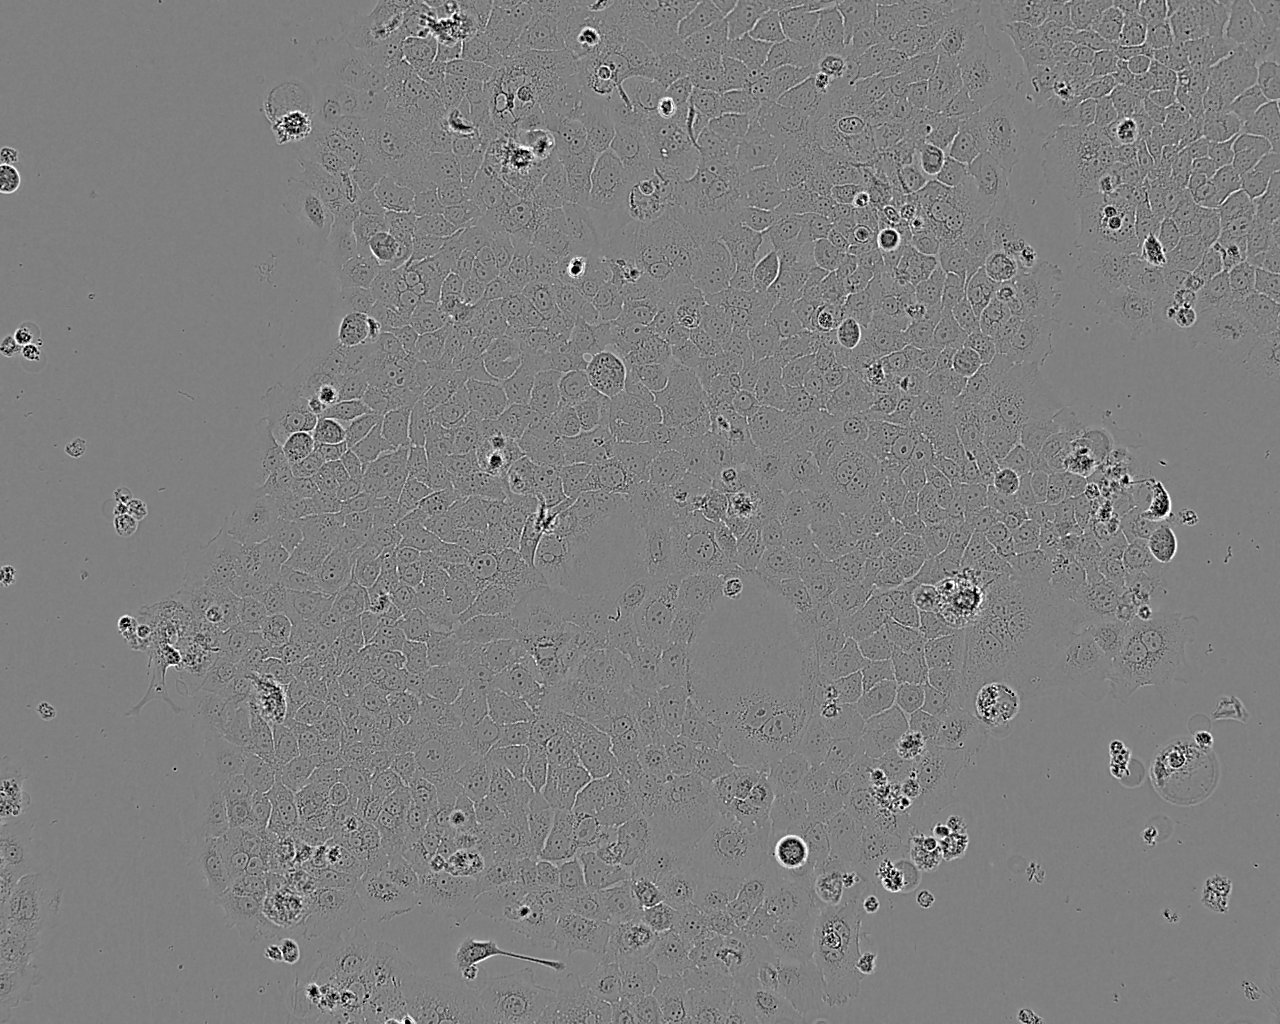 IEC-6 epithelioid cells大鼠小肠隐窝上皮细胞系,IEC-6 epithelioid cells